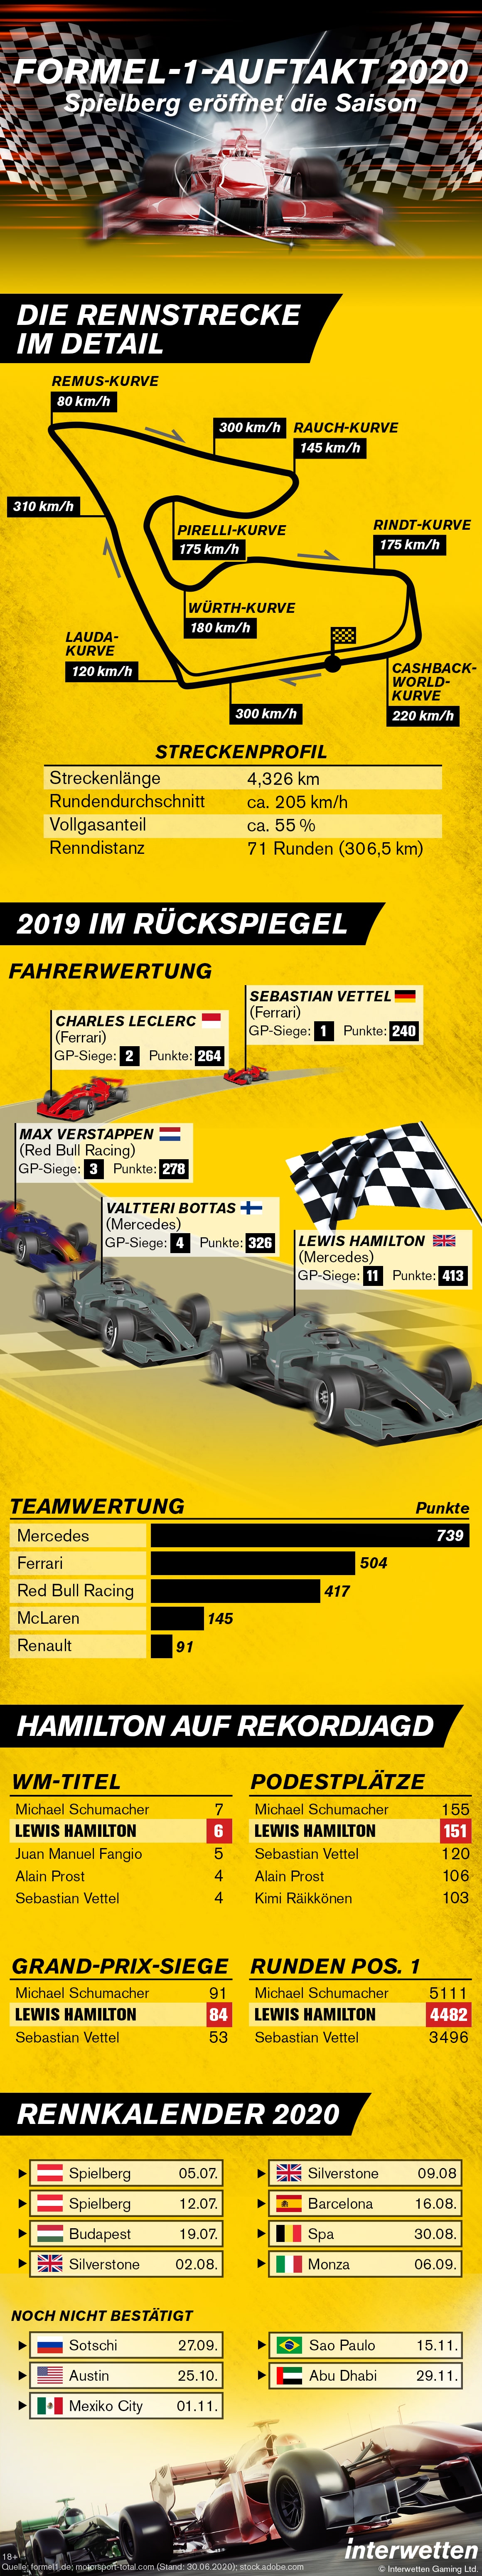 Infografik Formel-1-Auftakt 2020